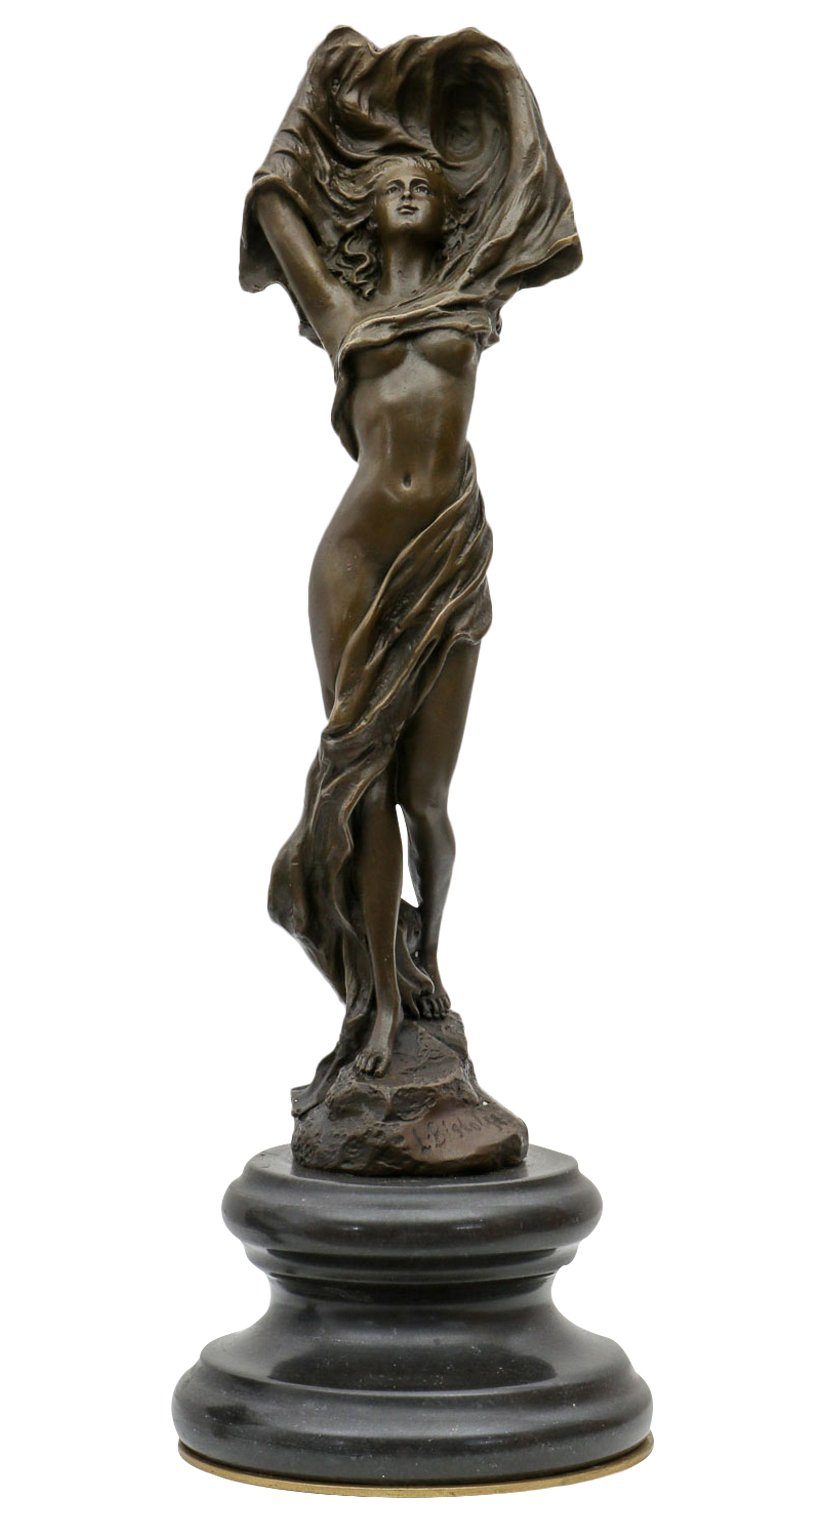 Aubaho Skulptur Bronzeskulptur nach Leonardo Bistolfi erotische Kunst Akt Figur Replik